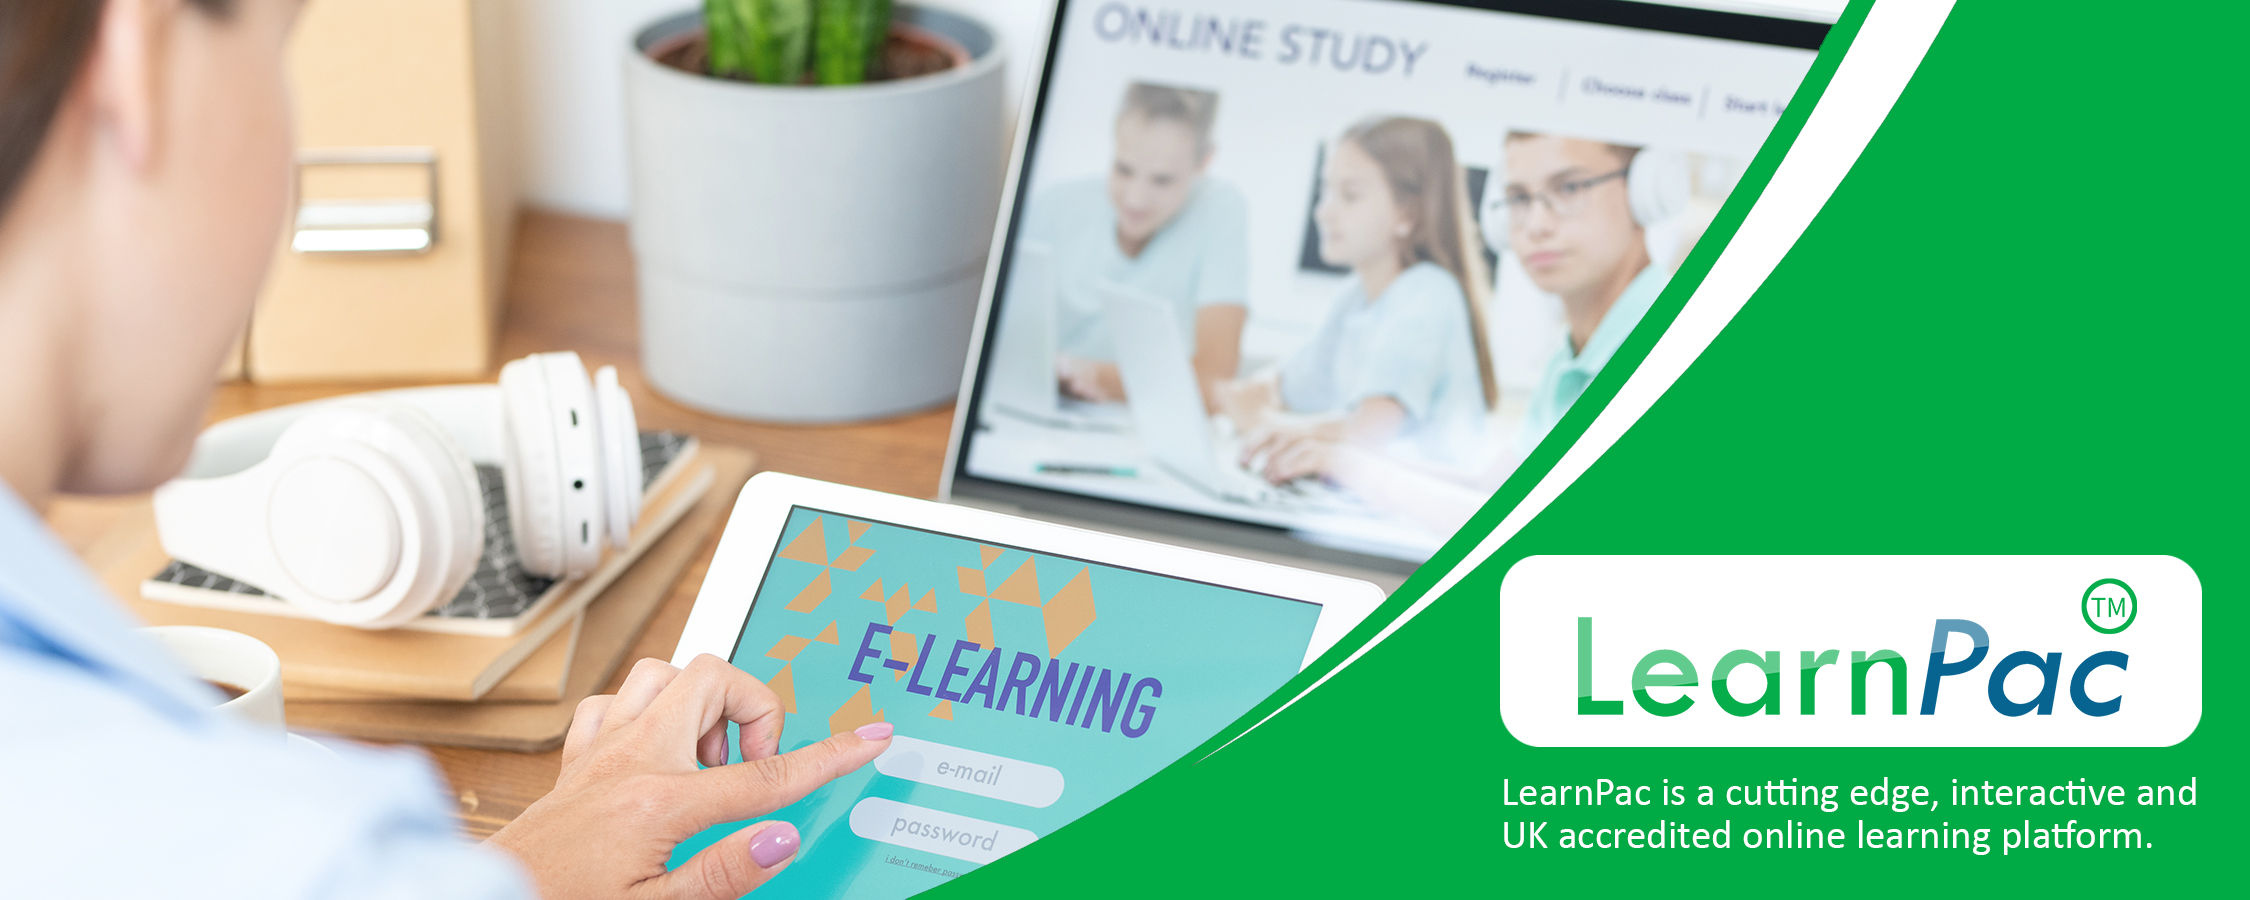 Hiring Strategies Training - Online Learning Courses - E-Learning Courses - LearnPac Systems UK -